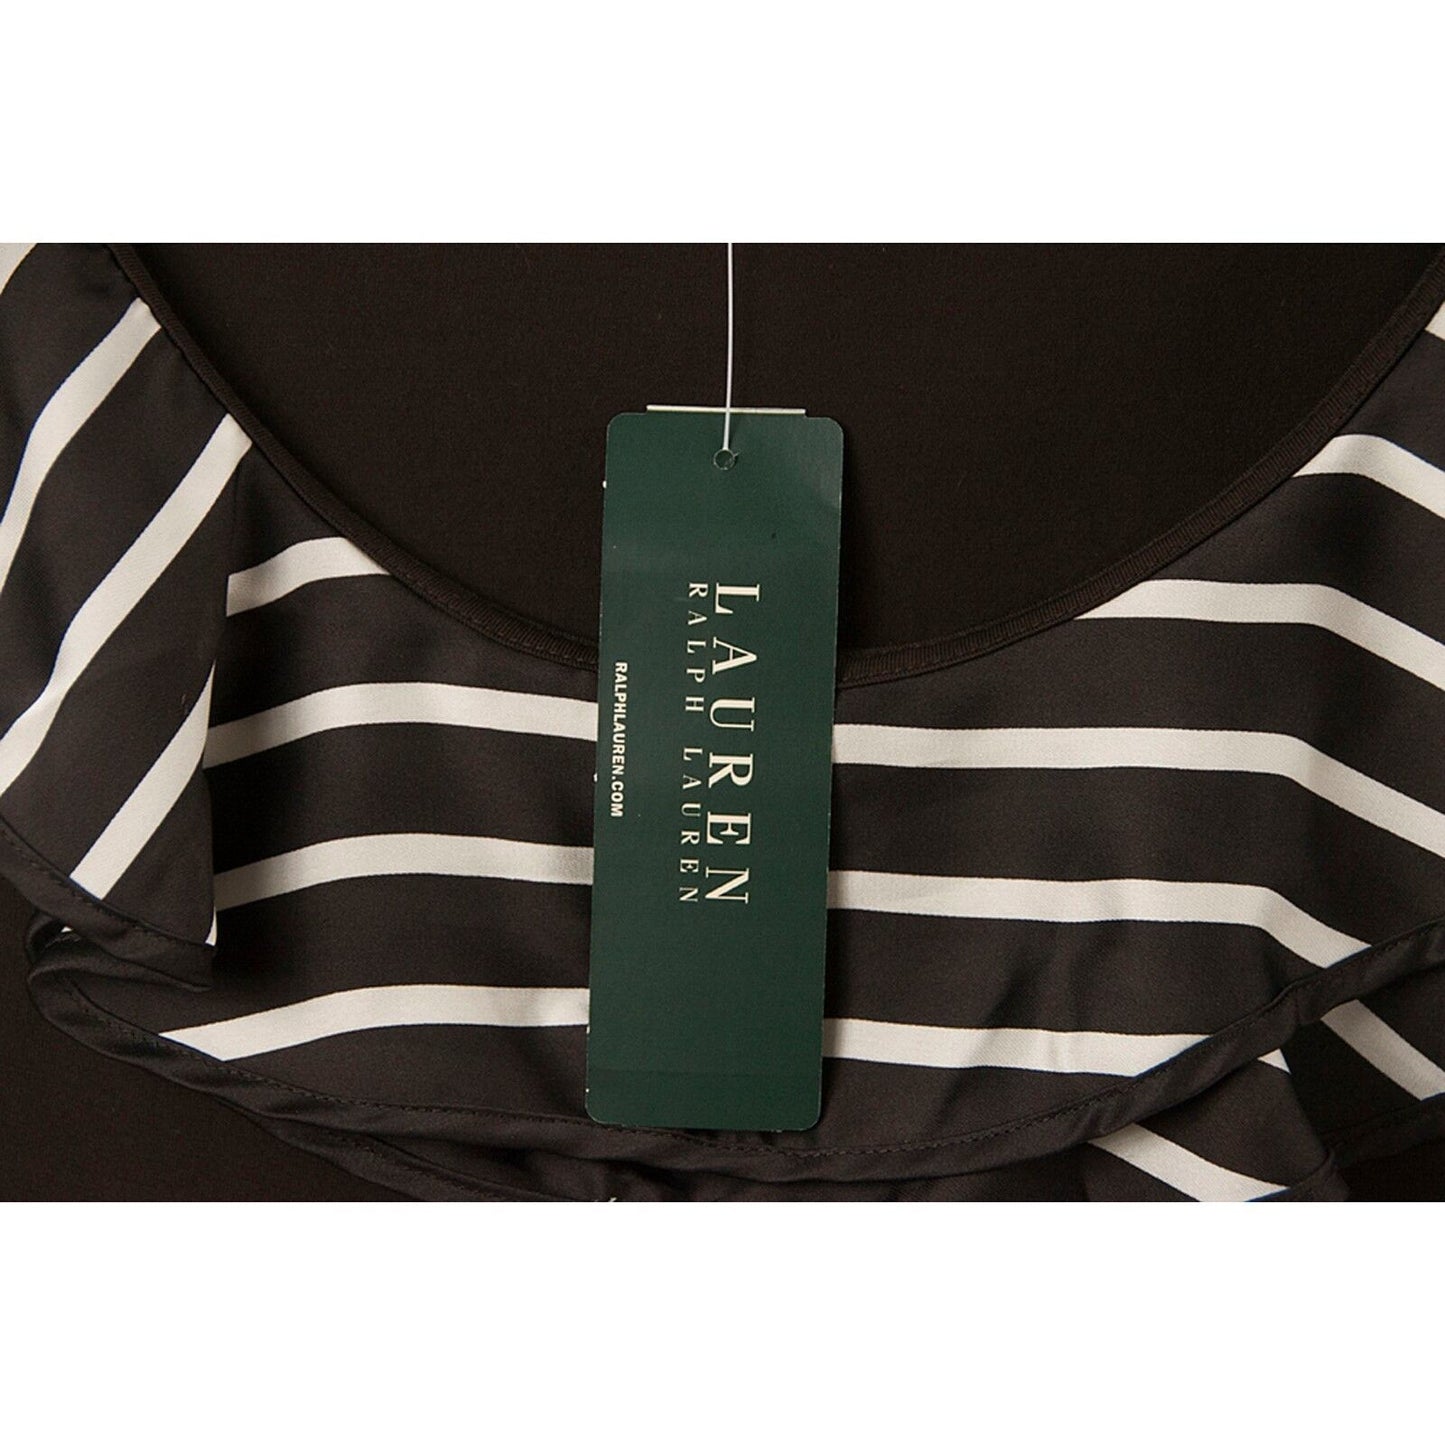 Ralph Lauren Brown Cream Stripe Ruffle Knit Top Blouse Shirt Size M NWT